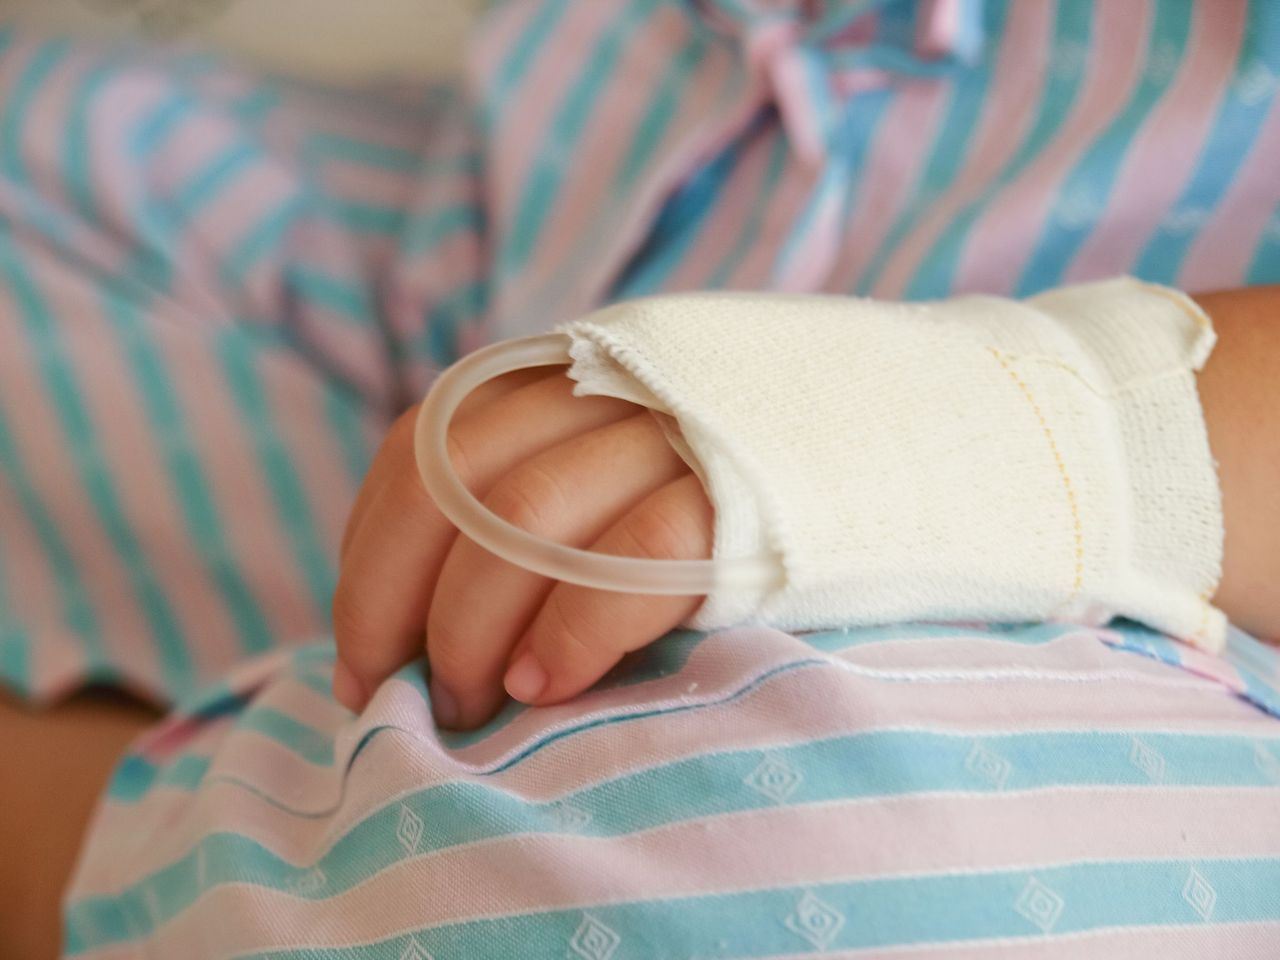 A child's hand dextrosed. | Source: Shutterstock